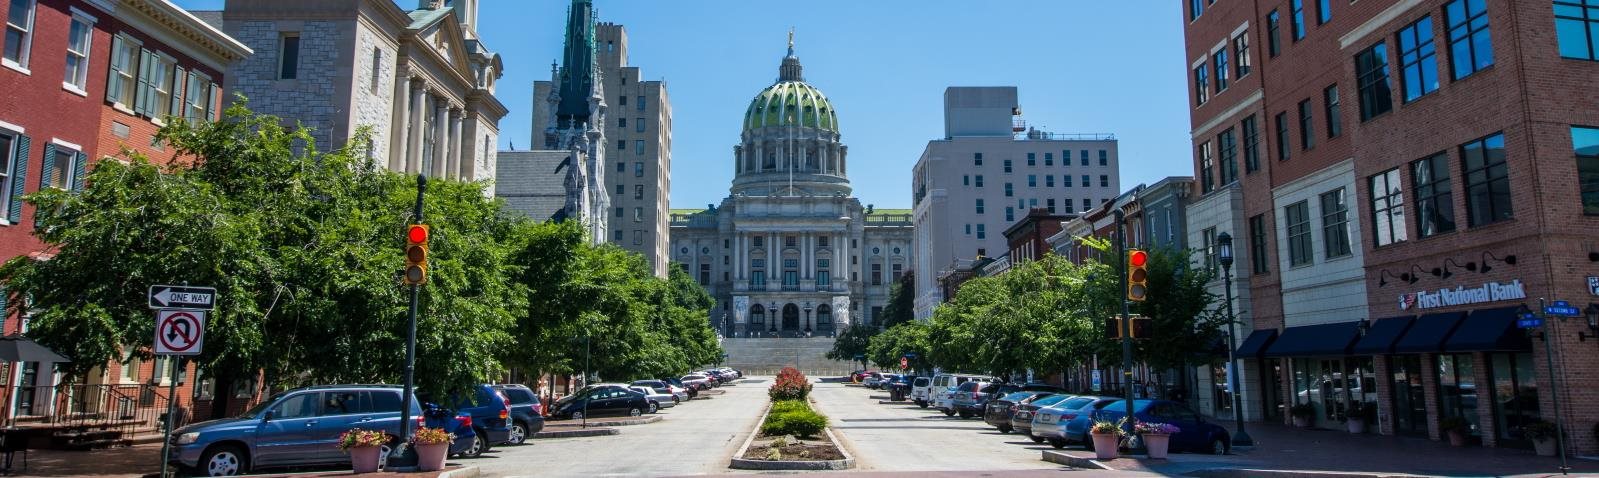 Image of Harrisburg Pennsylvania